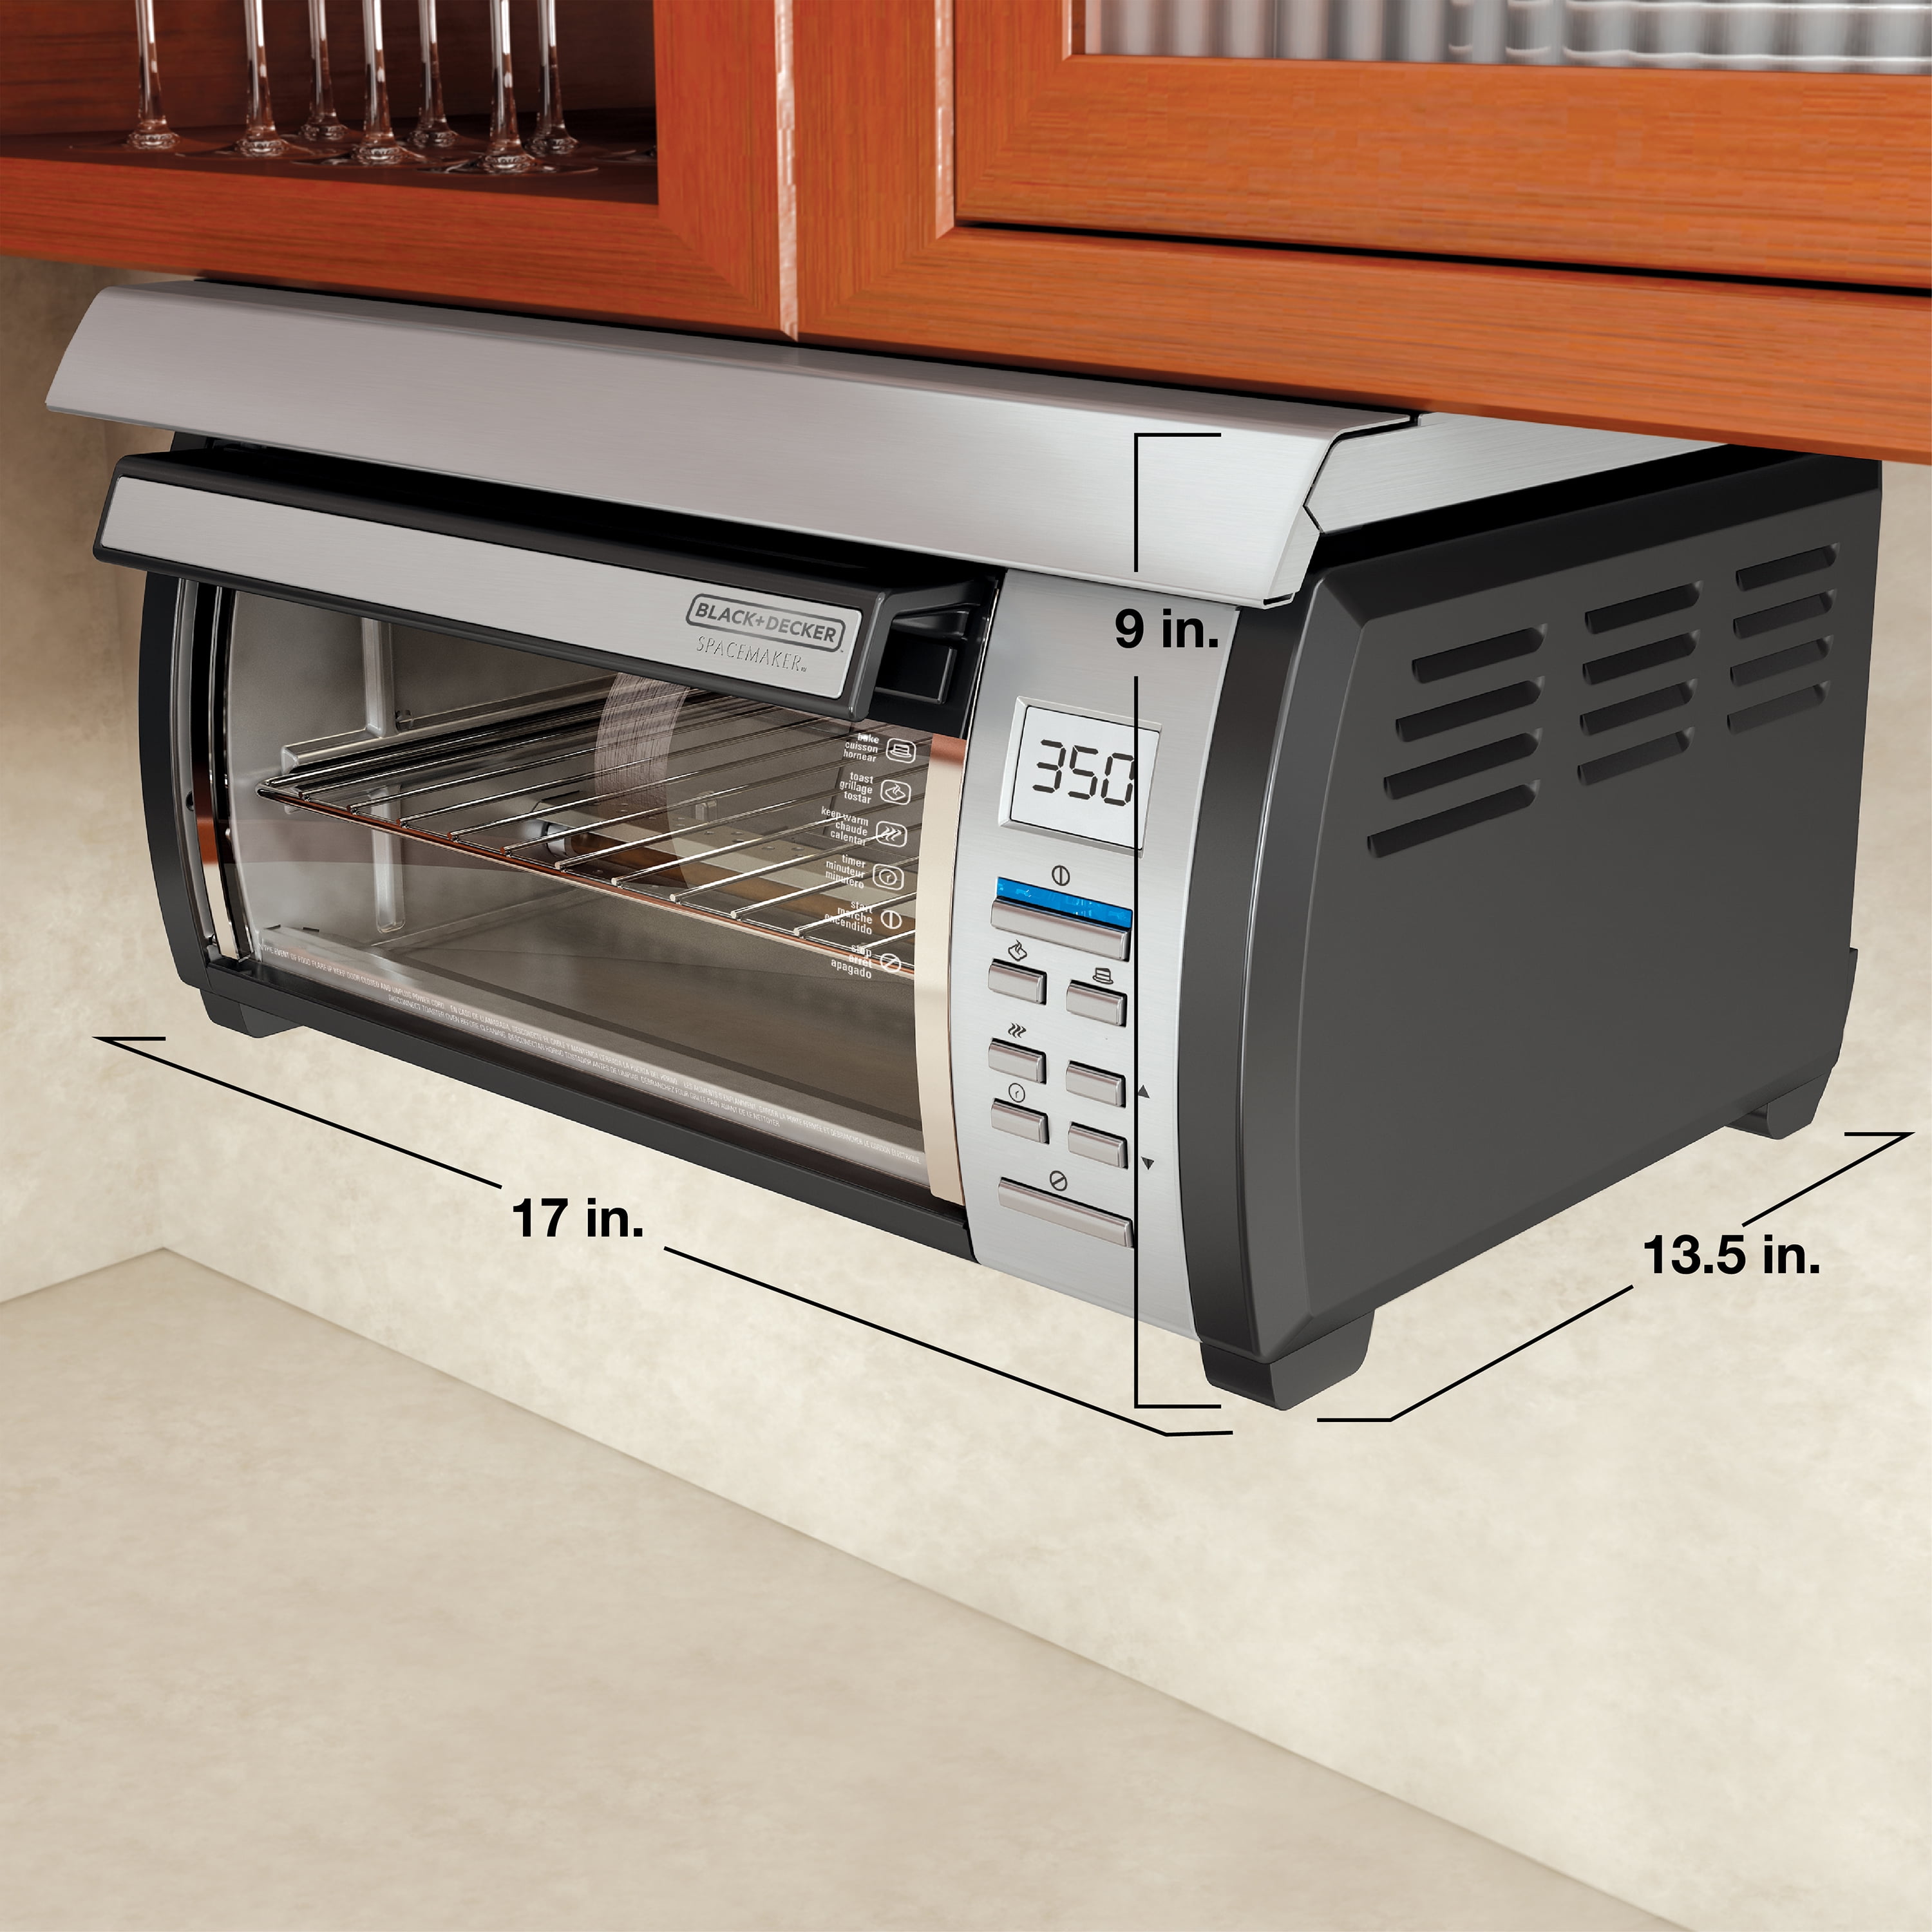 BLACK+DECKER SpaceMaker Under-Counter Toaster Oven, Black/Silver, TROS1000D  